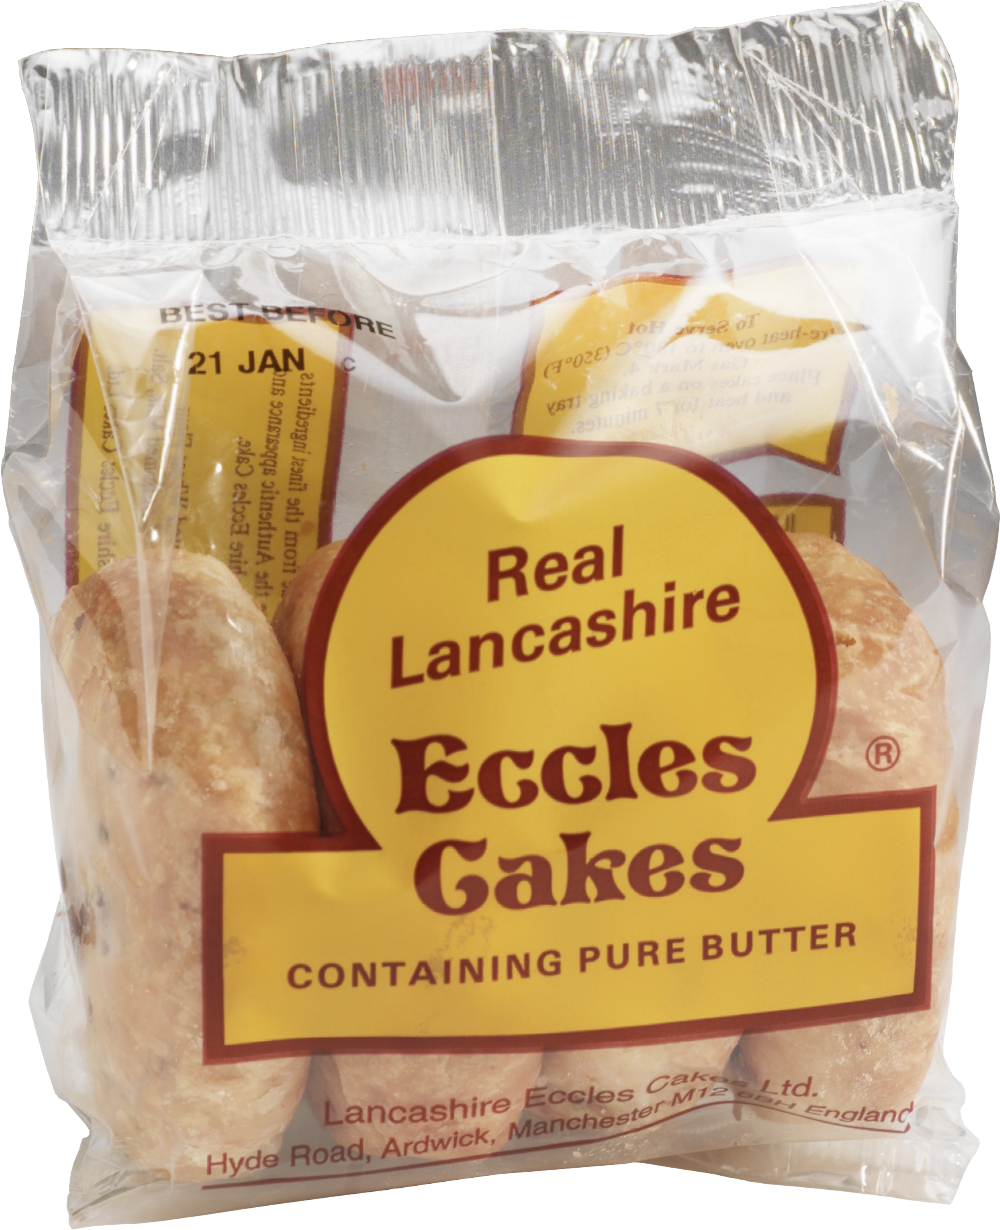 REAL LANCASHIRE 4 Eccles Cakes